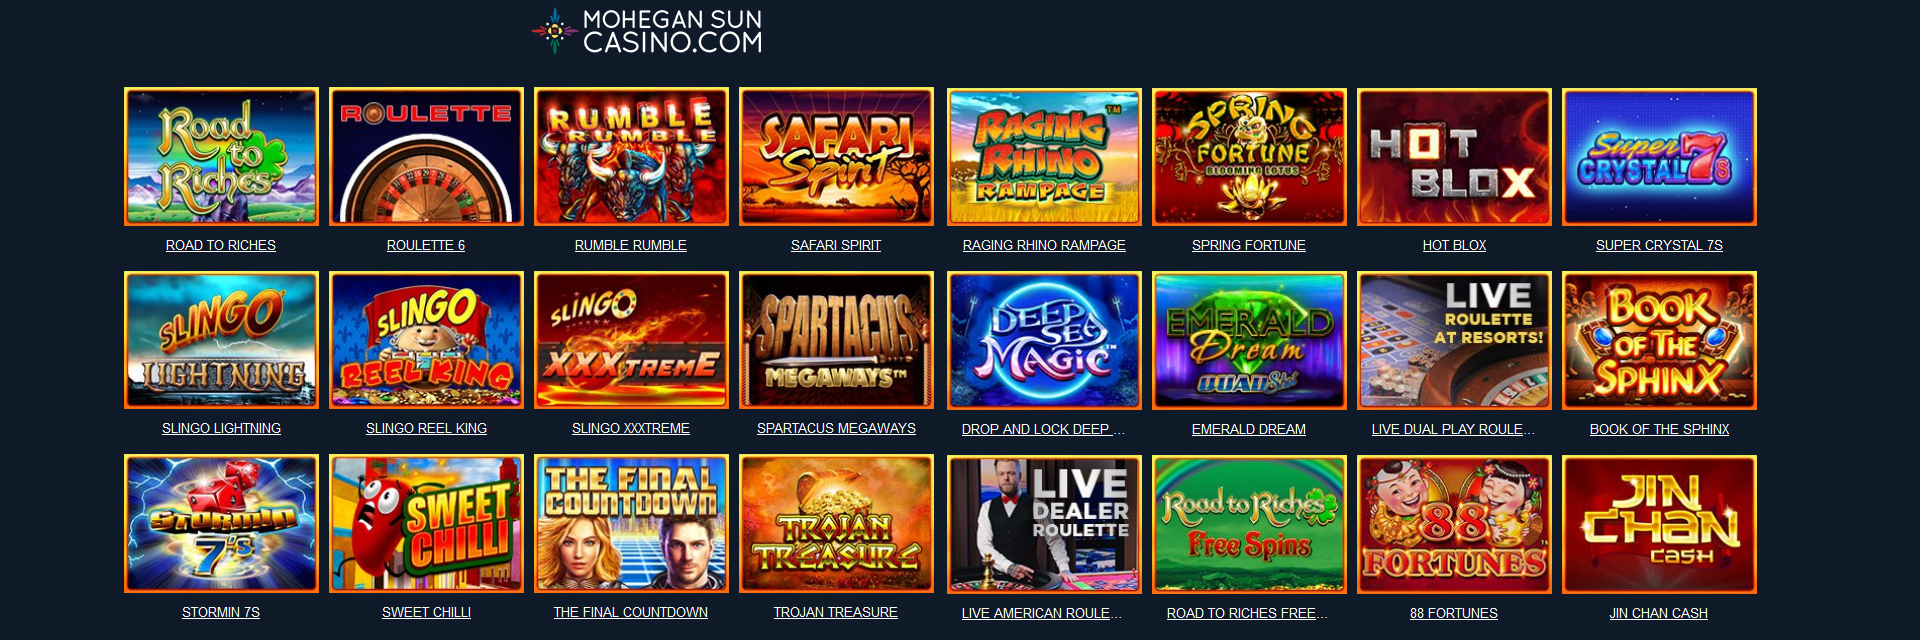 Mohegan Sun casino slot games. 